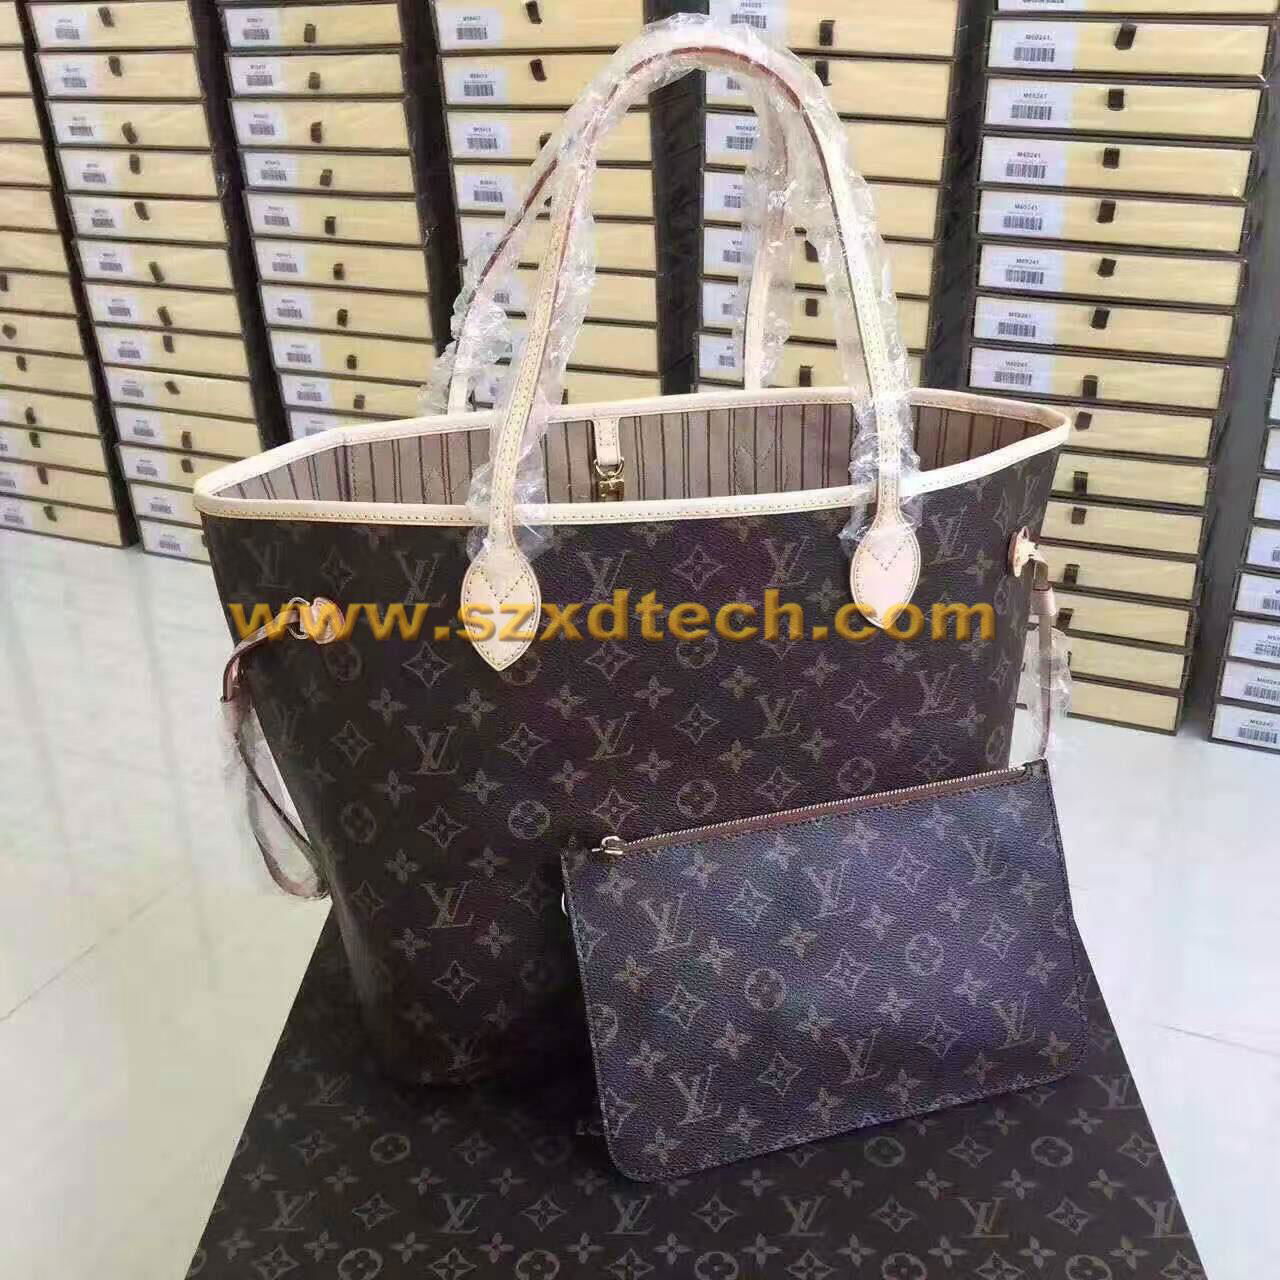 Wholesale Handbags, buy Louis Vuitton Aaa Replica Luggage Bags,Lv